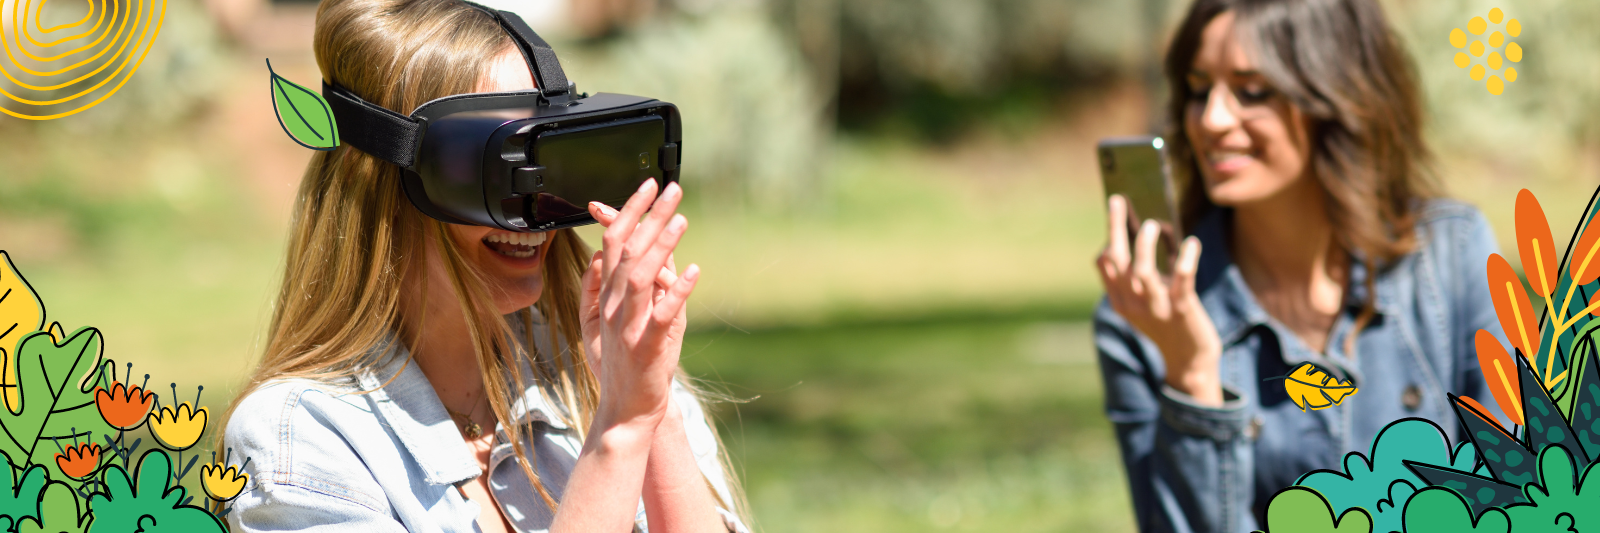 Virtual Reality Smartphone